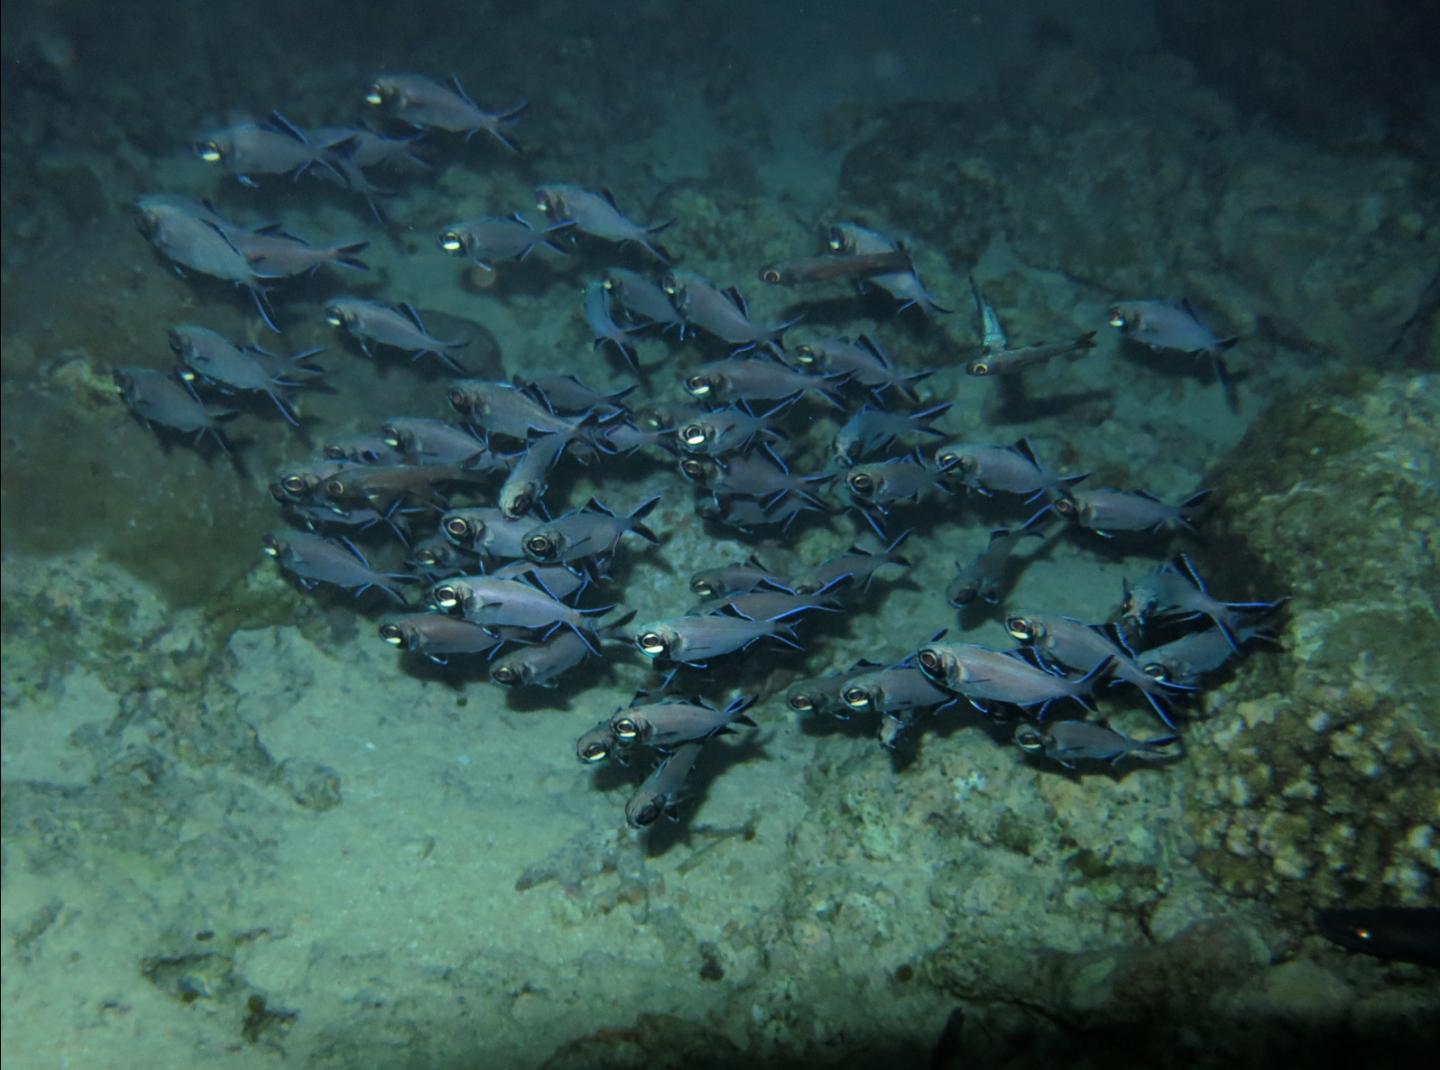 Splitfin Flashlight Fish Uses Bioluminescent Light to Illuminate Planktonic Prey